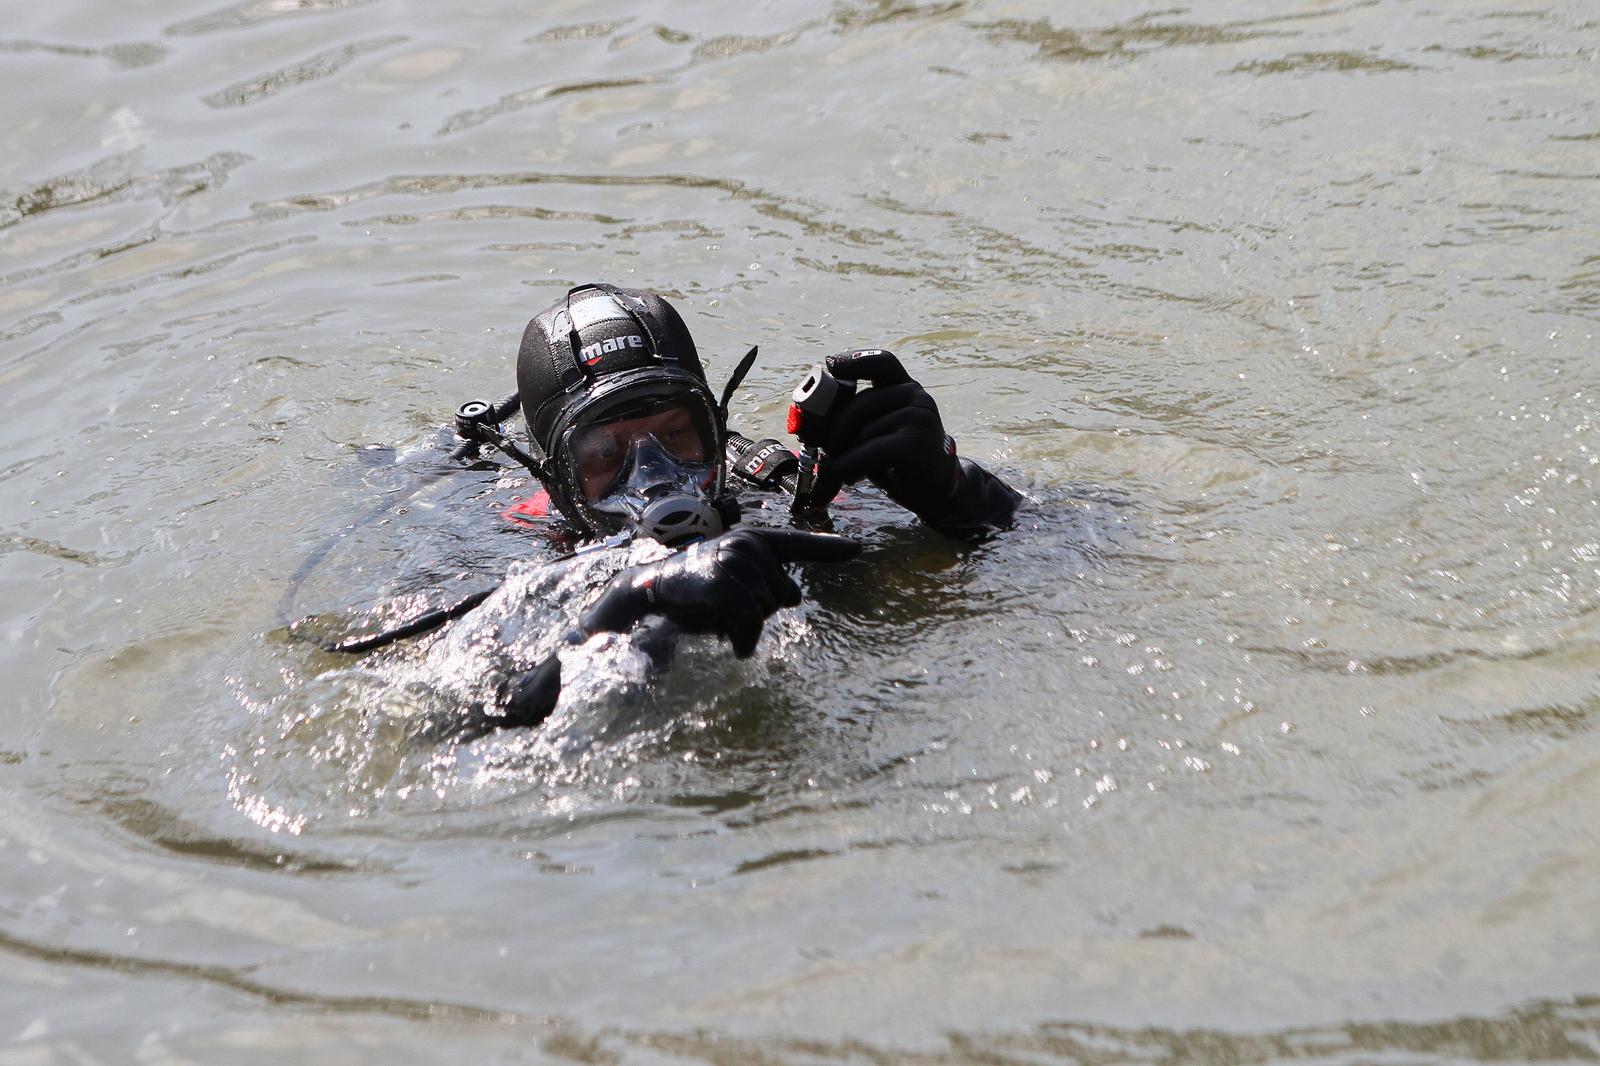 07.03.2015., Vinkovci - Pokazna vjezba spasavanja iz voda vinkovackog HGSS-a na rijeci Bosut, pod nazivom "Bosut-2015". rPhoto: Marko Mrkonjic/PIXSELL